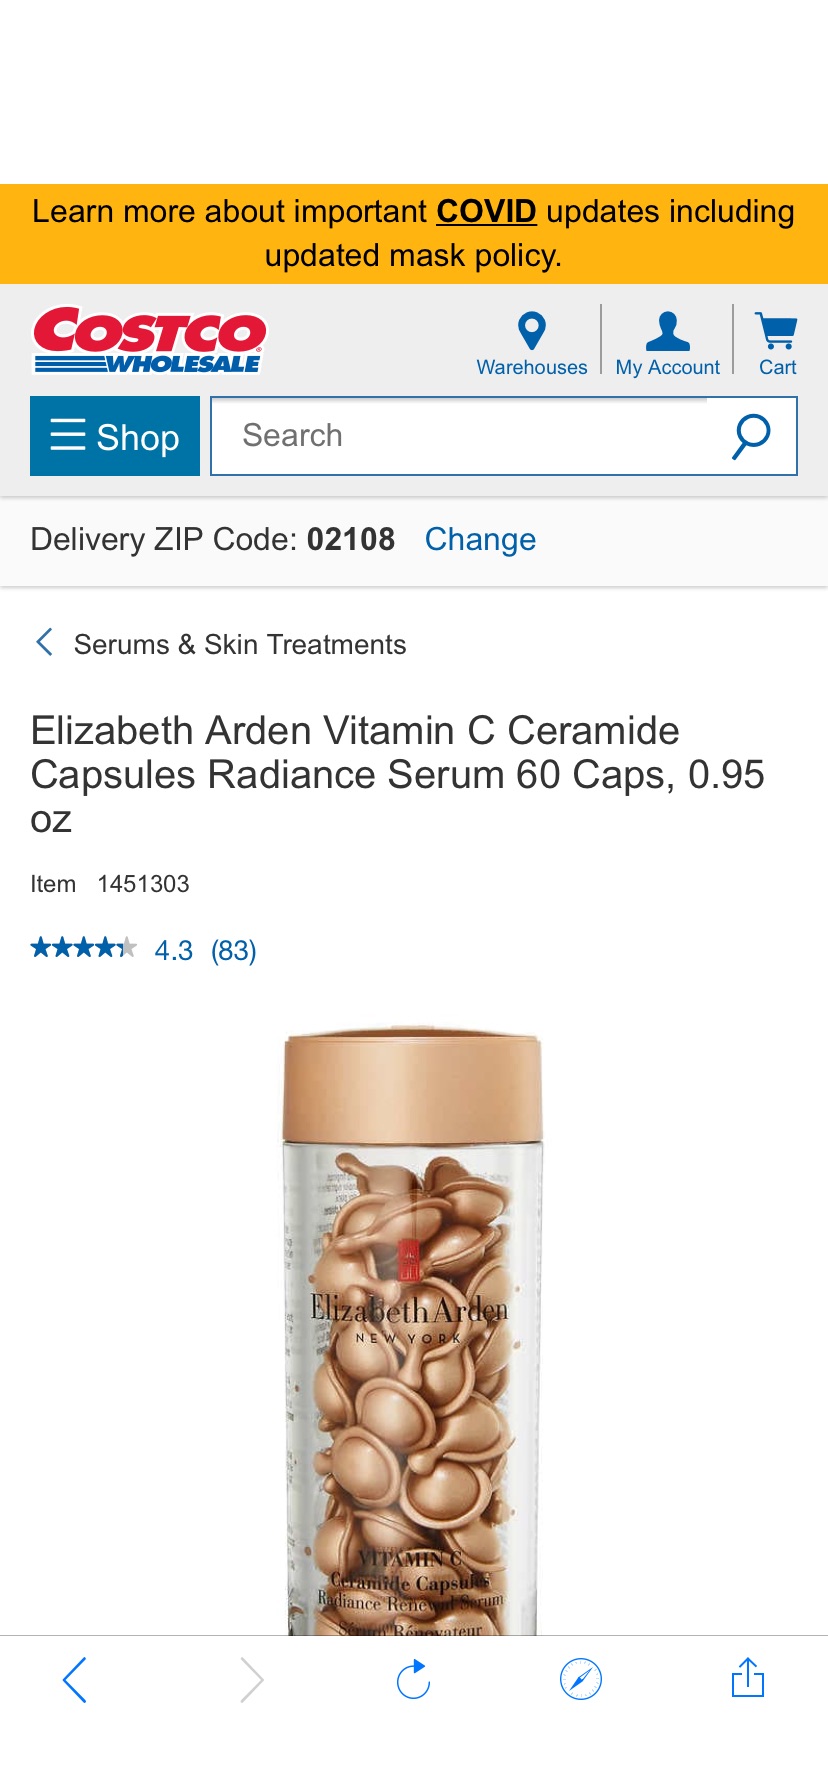 伊丽莎白雅顿 Elizabeth Arden Vitamin C Ceramide Capsules Radiance Serum 60 Caps, 0.95 oz | Costco